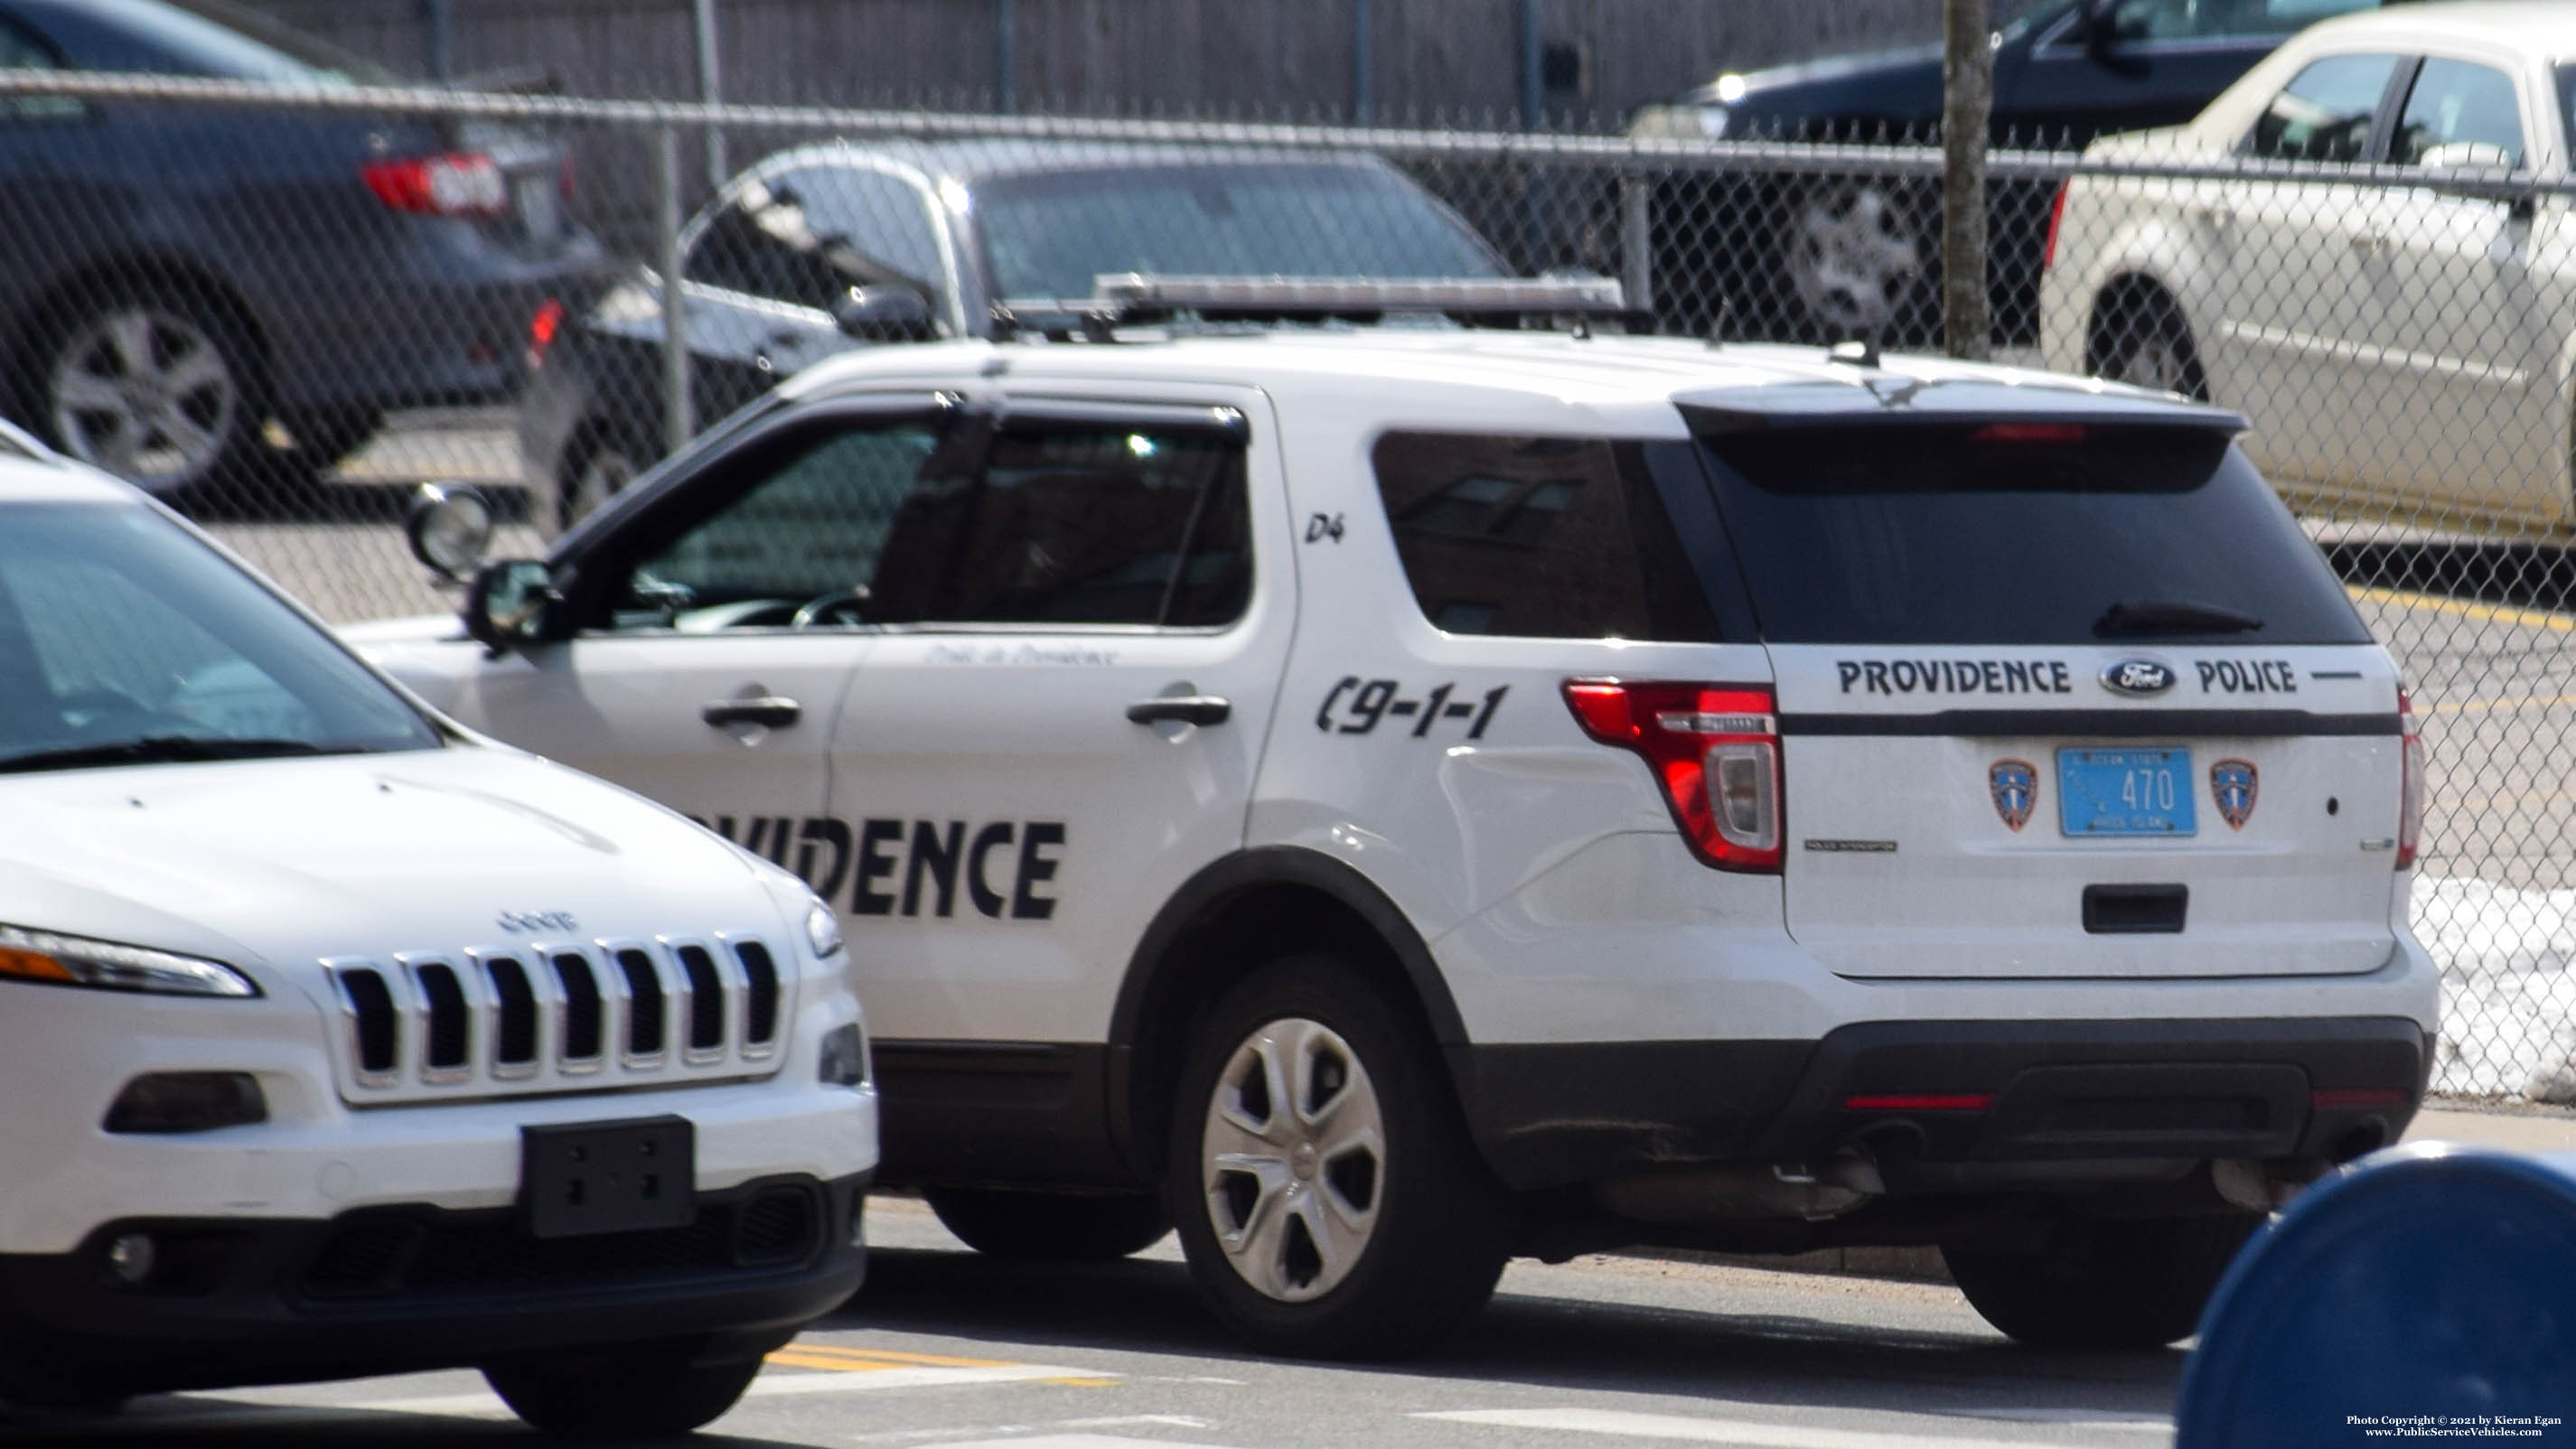 A photo  of Providence Police
            Cruiser 470, a 2015 Ford Police Interceptor Utility             taken by Kieran Egan